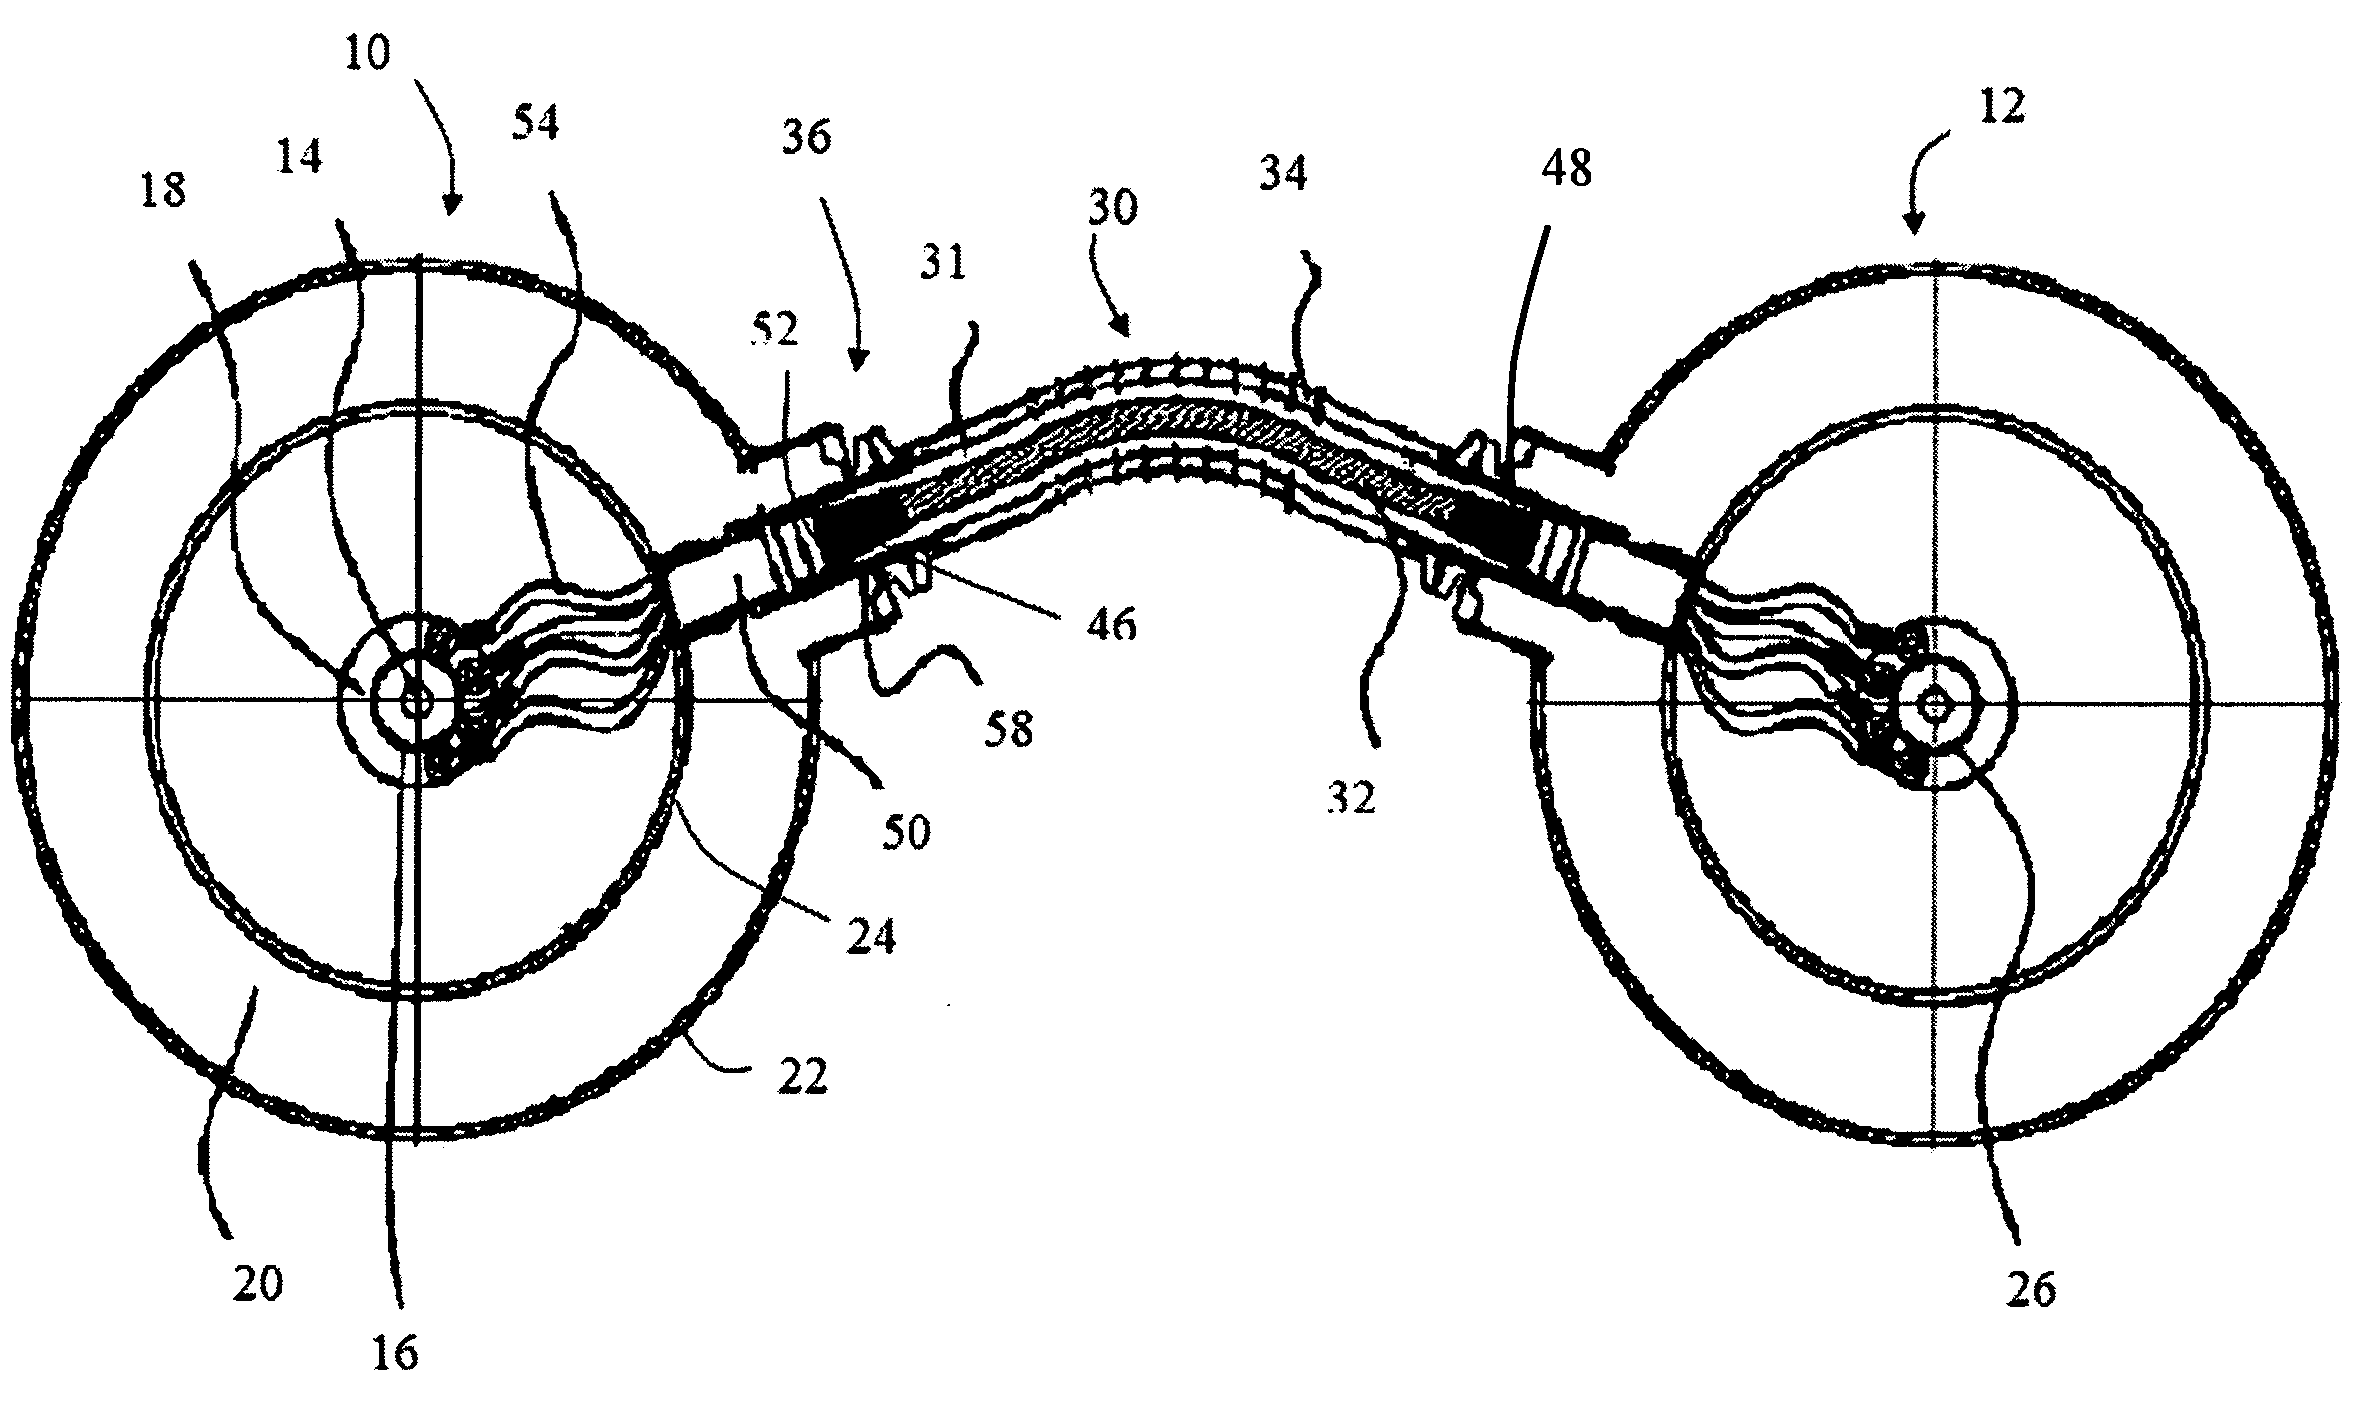 Connection arrangement for superconductor cable shields